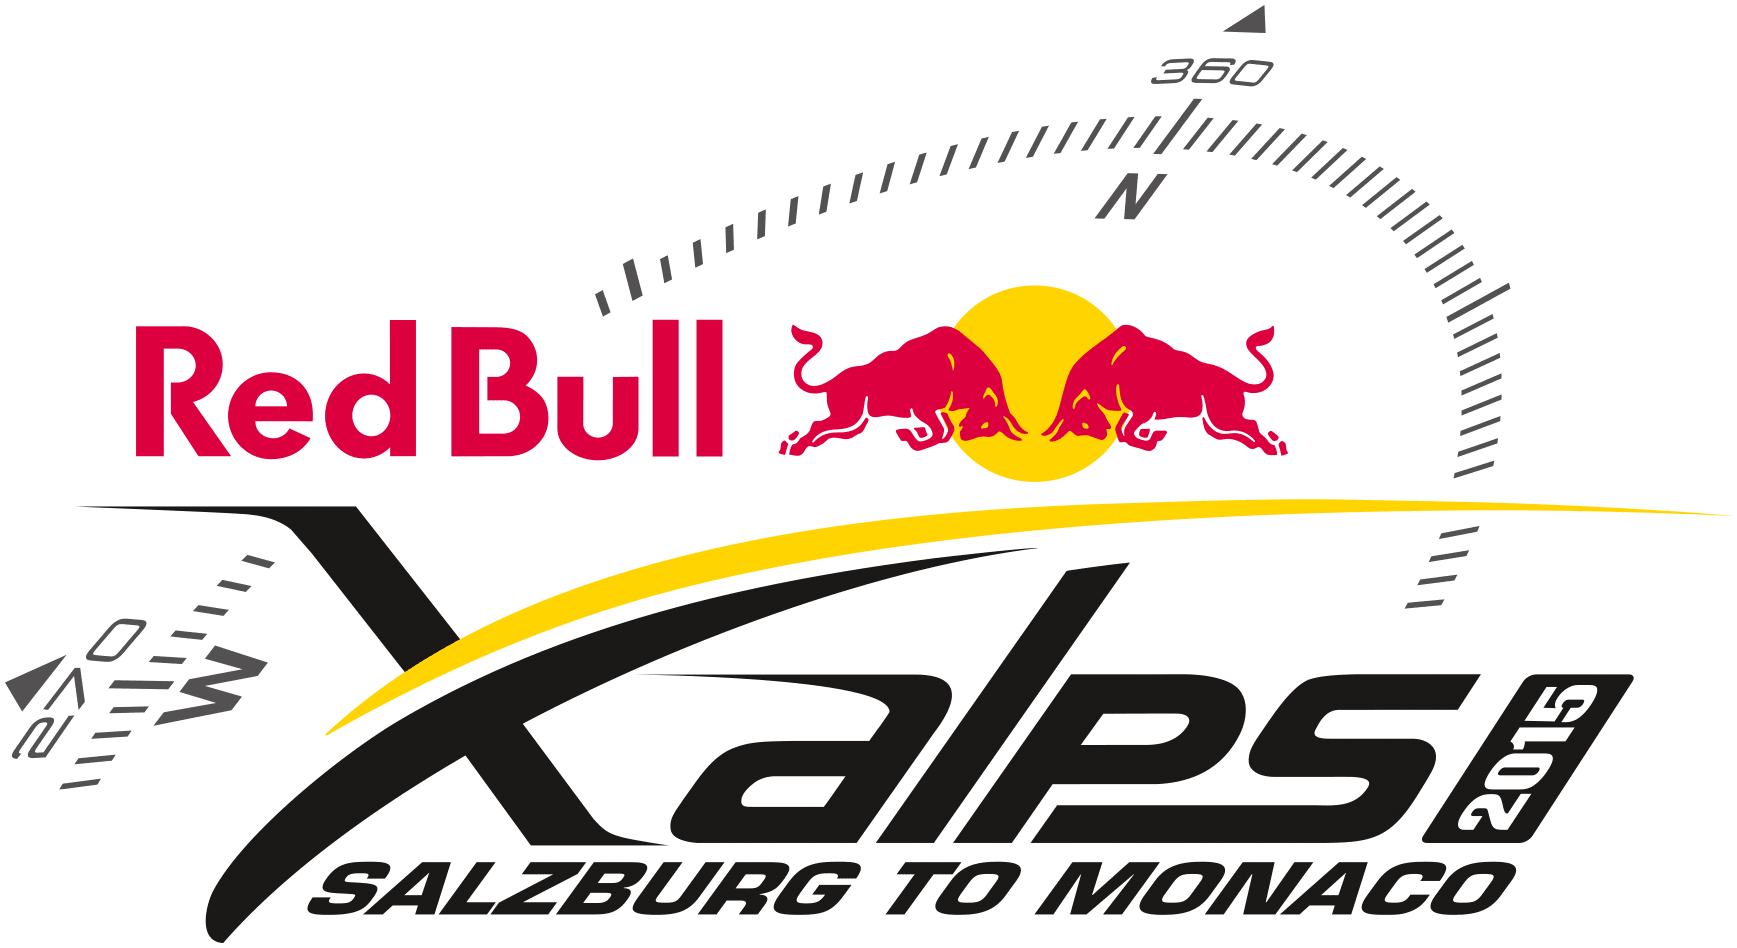 X-alps logo